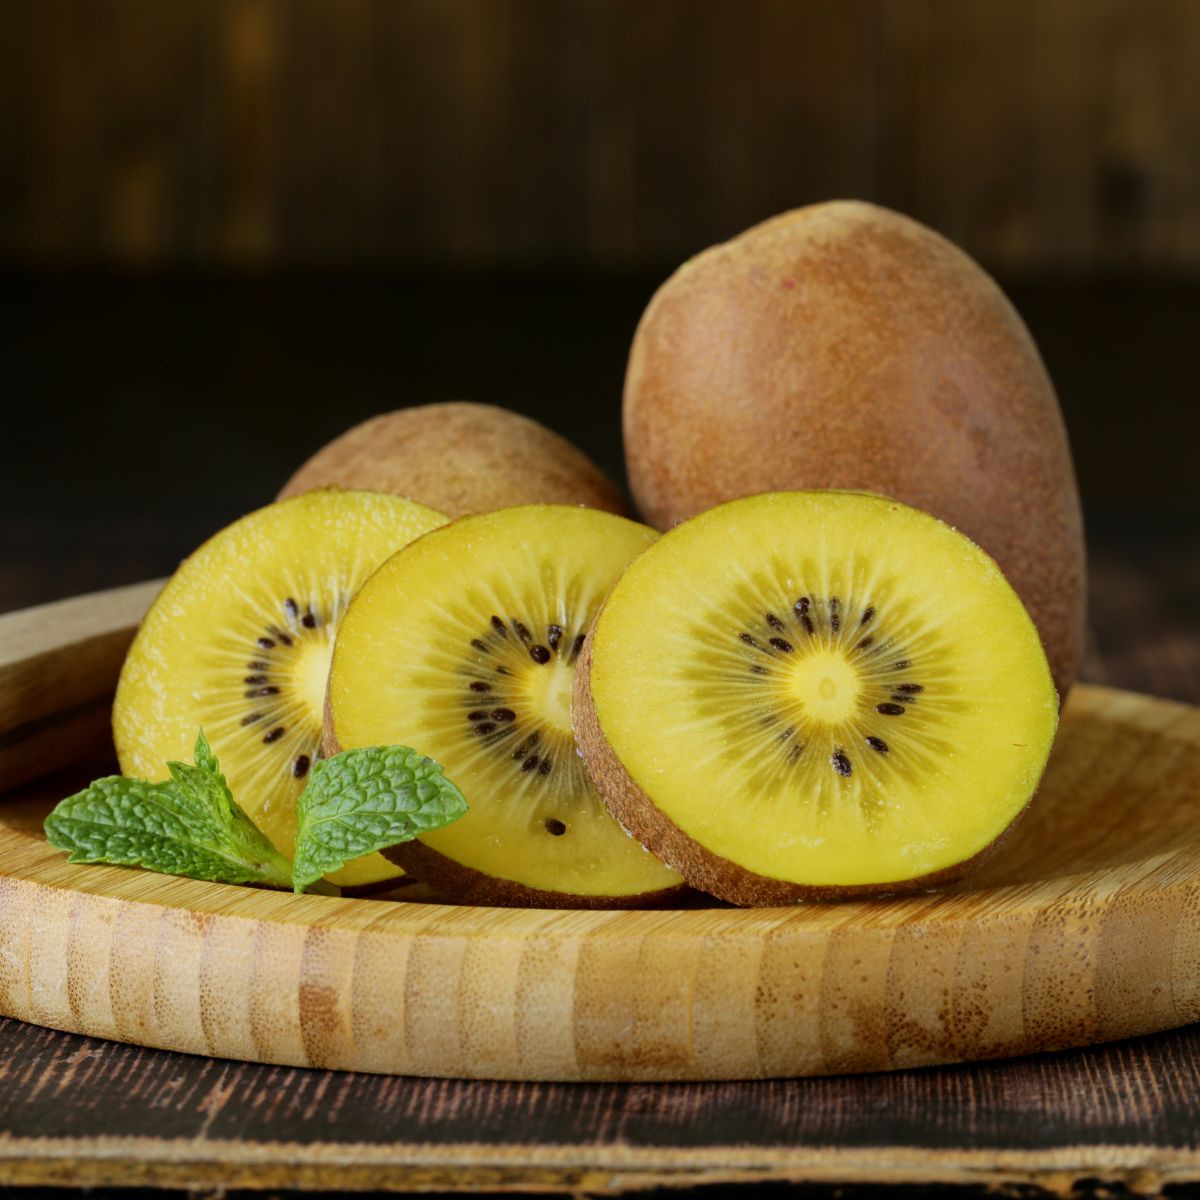 Golden kiwi fruit on a wooden plate